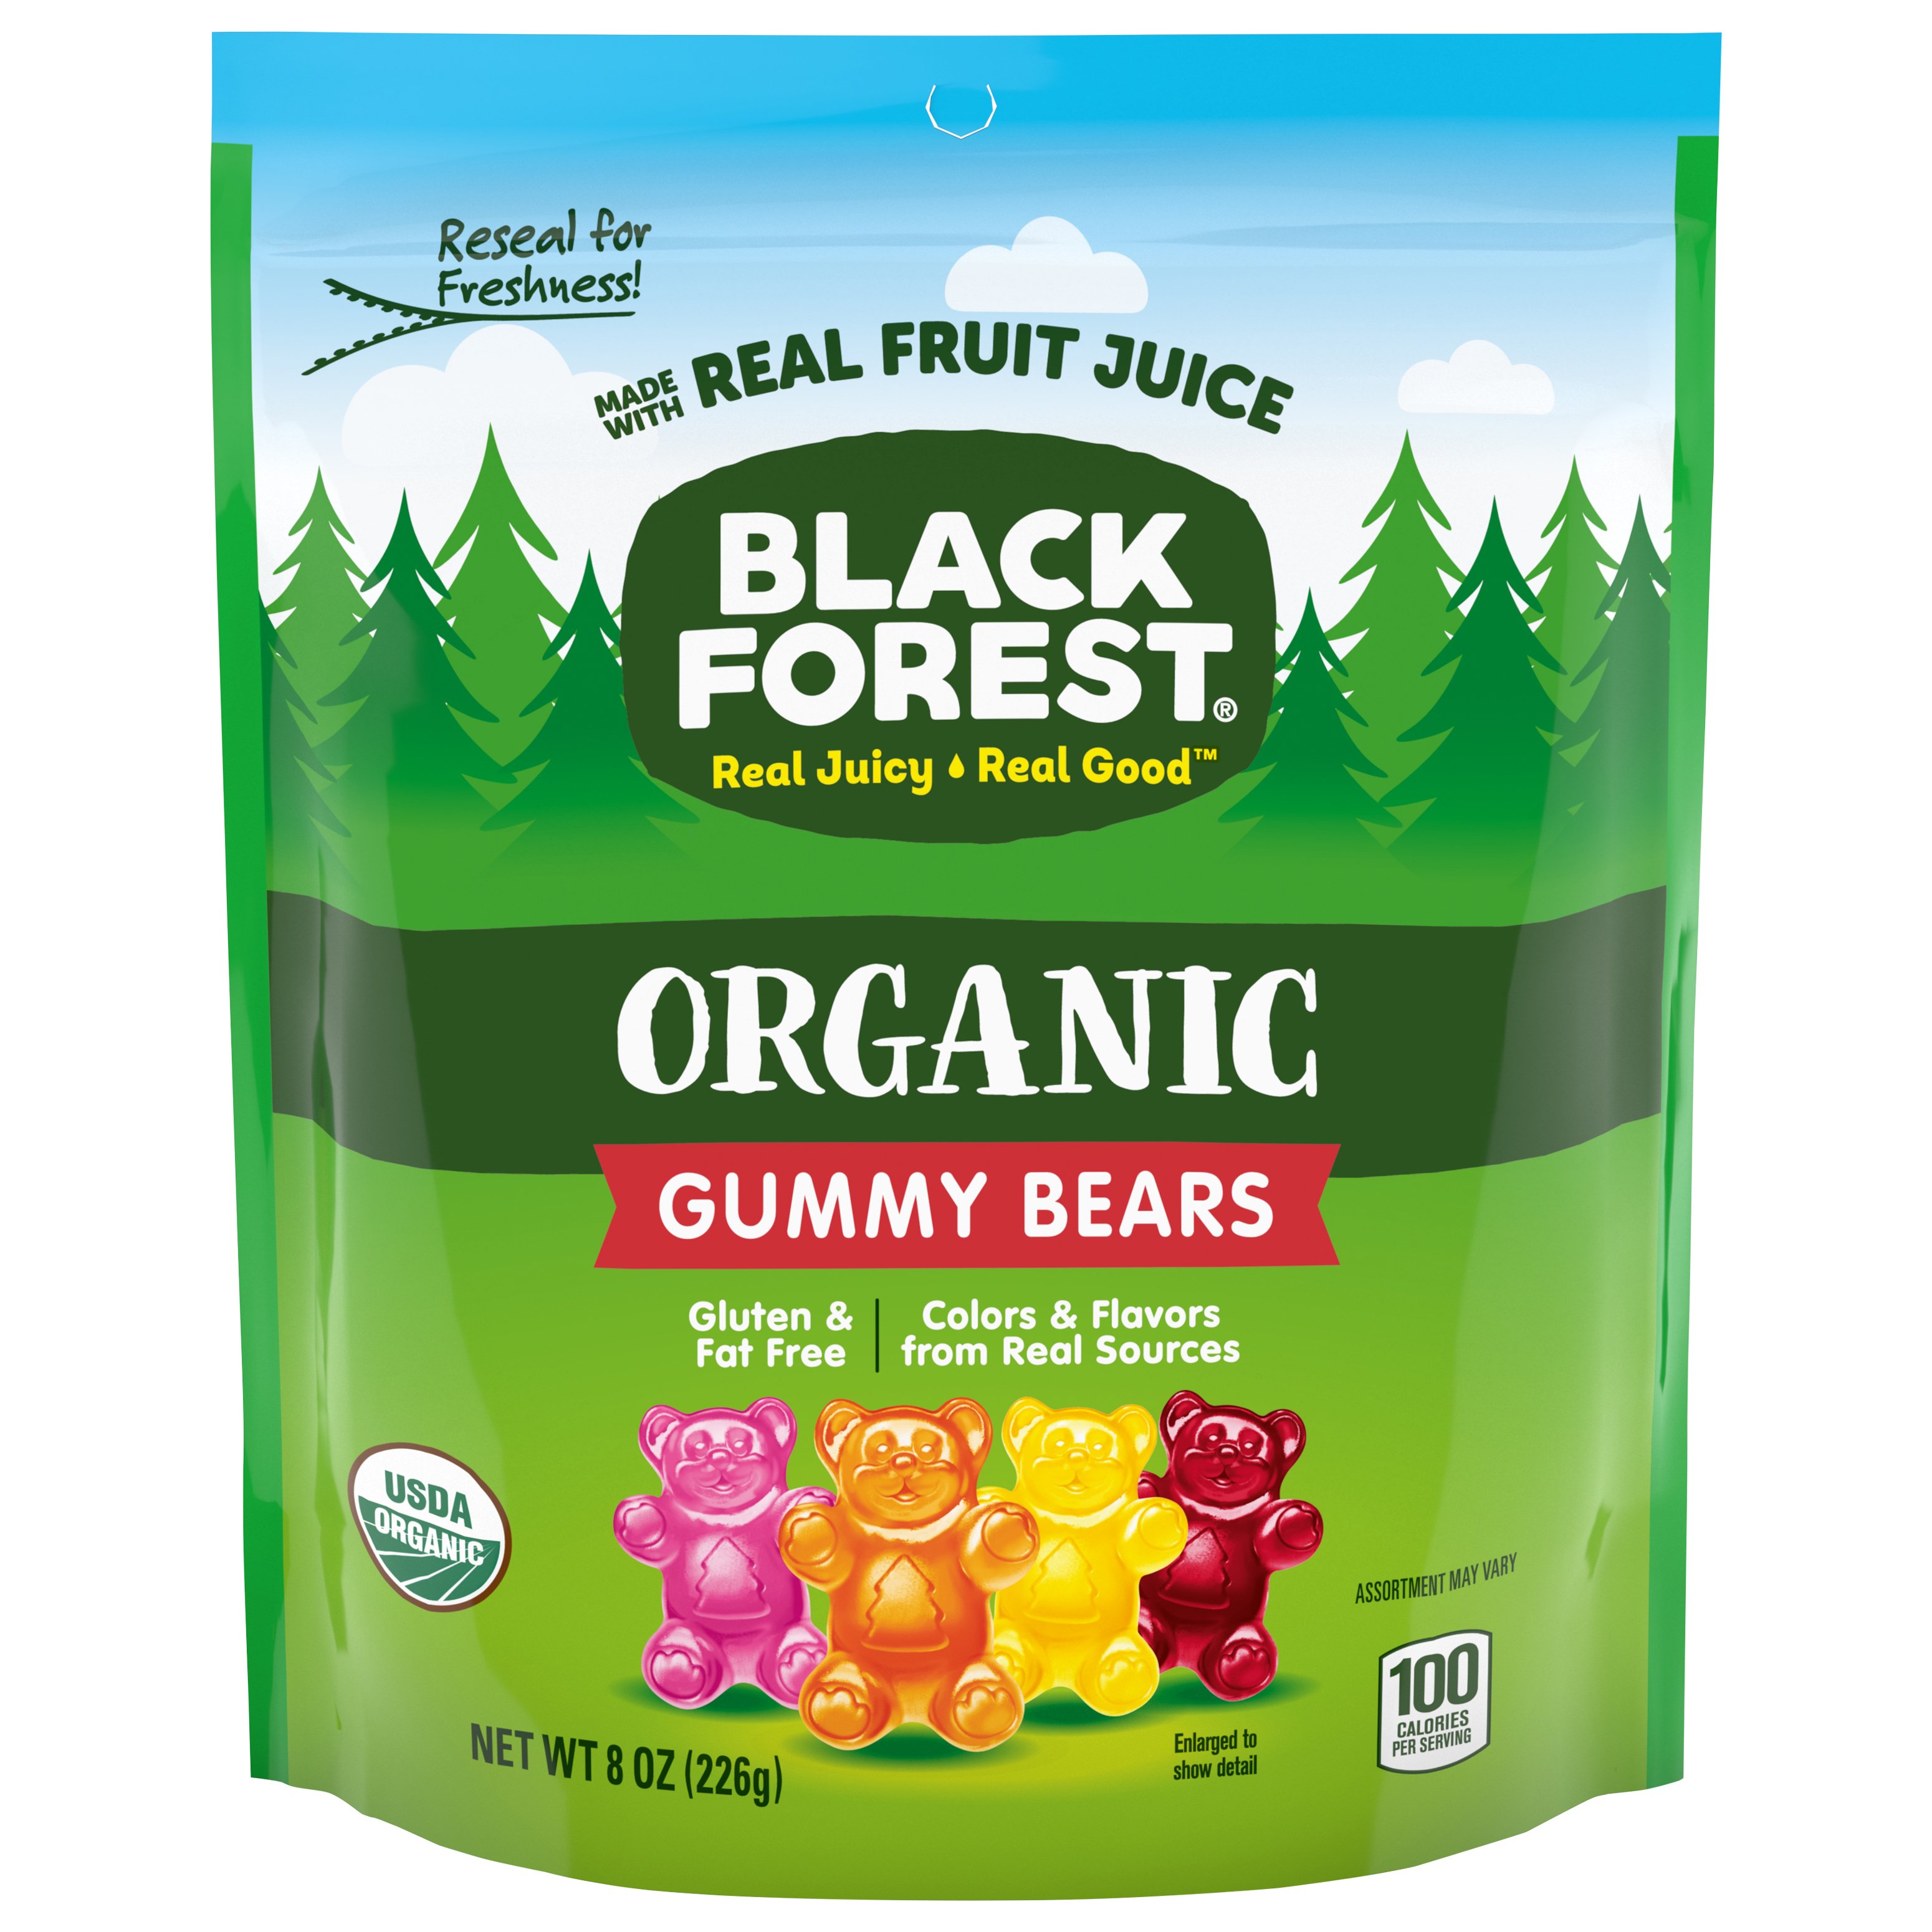 The smell of Gummi Bears instead of blackcurrant